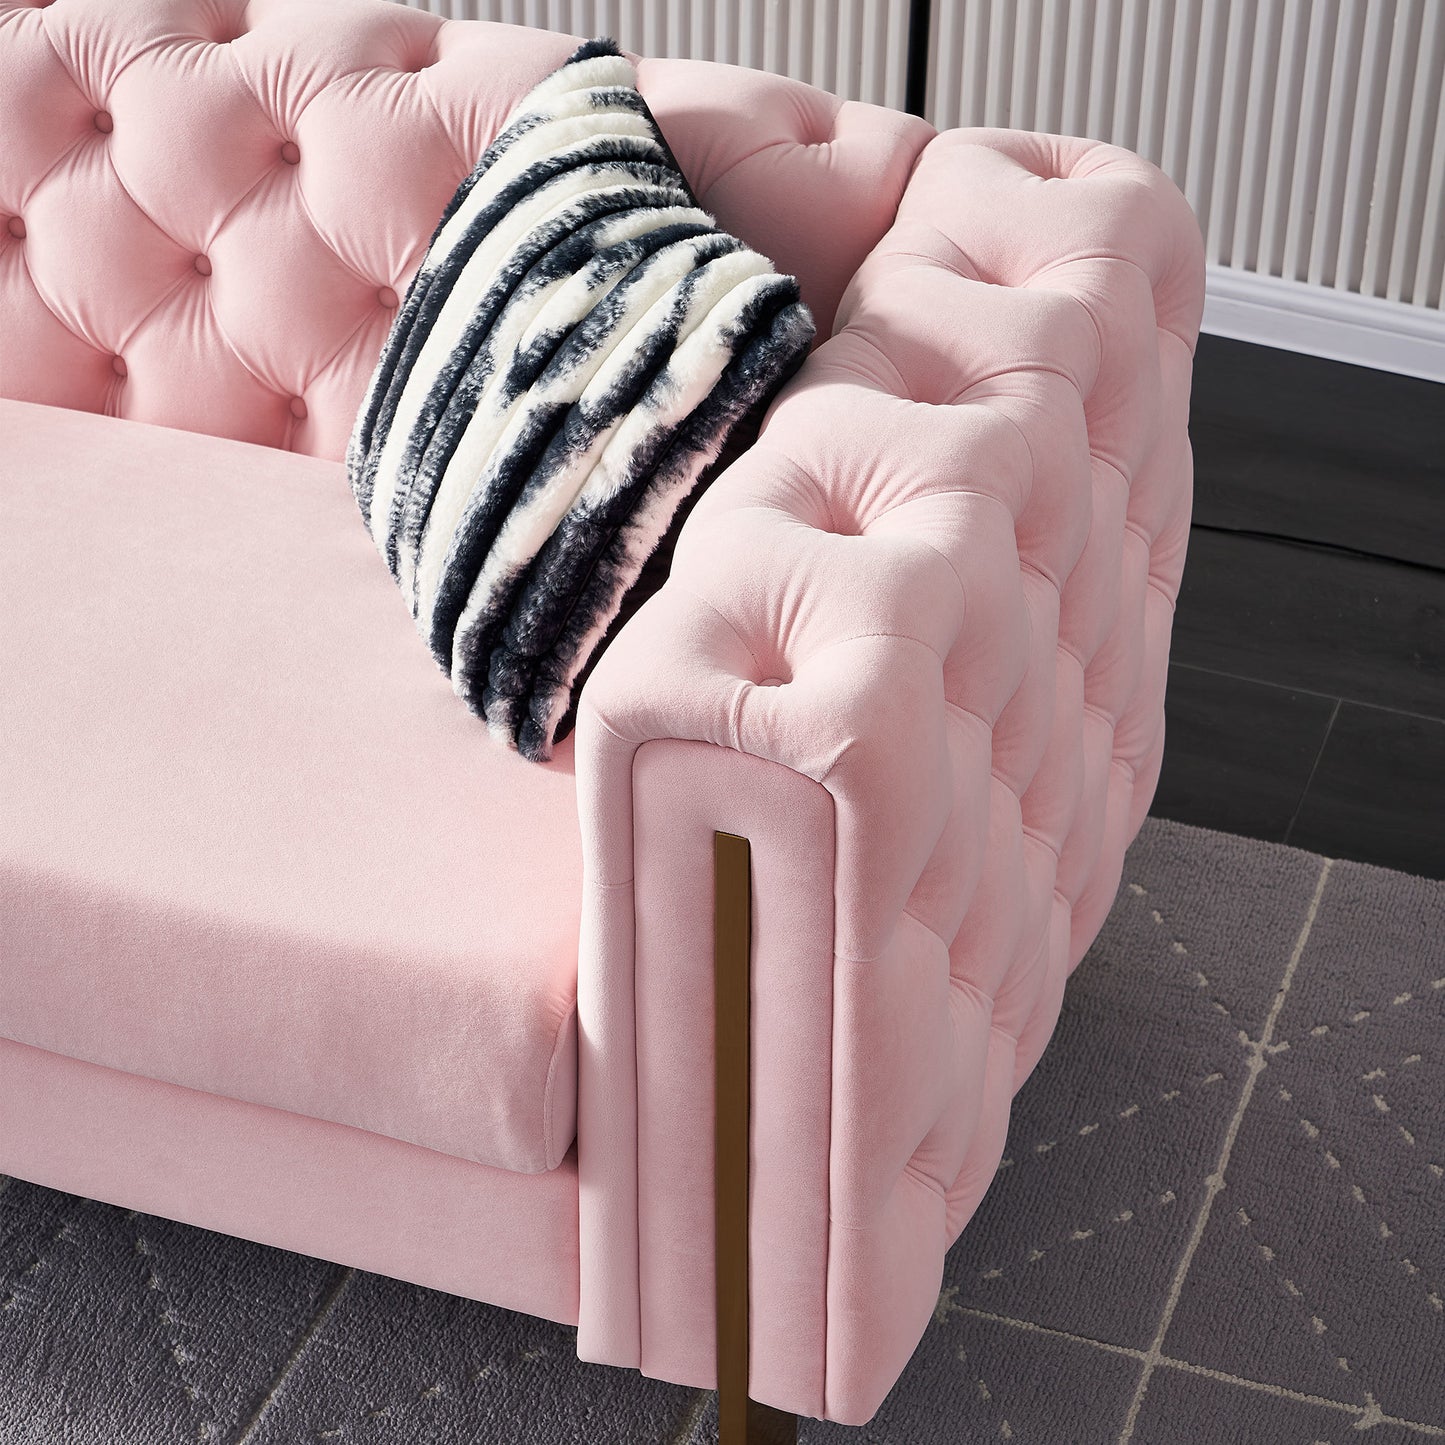 Chesterfield Modern Tufted Velvet Living Room Sofa, 84.25''W Couch,Pink